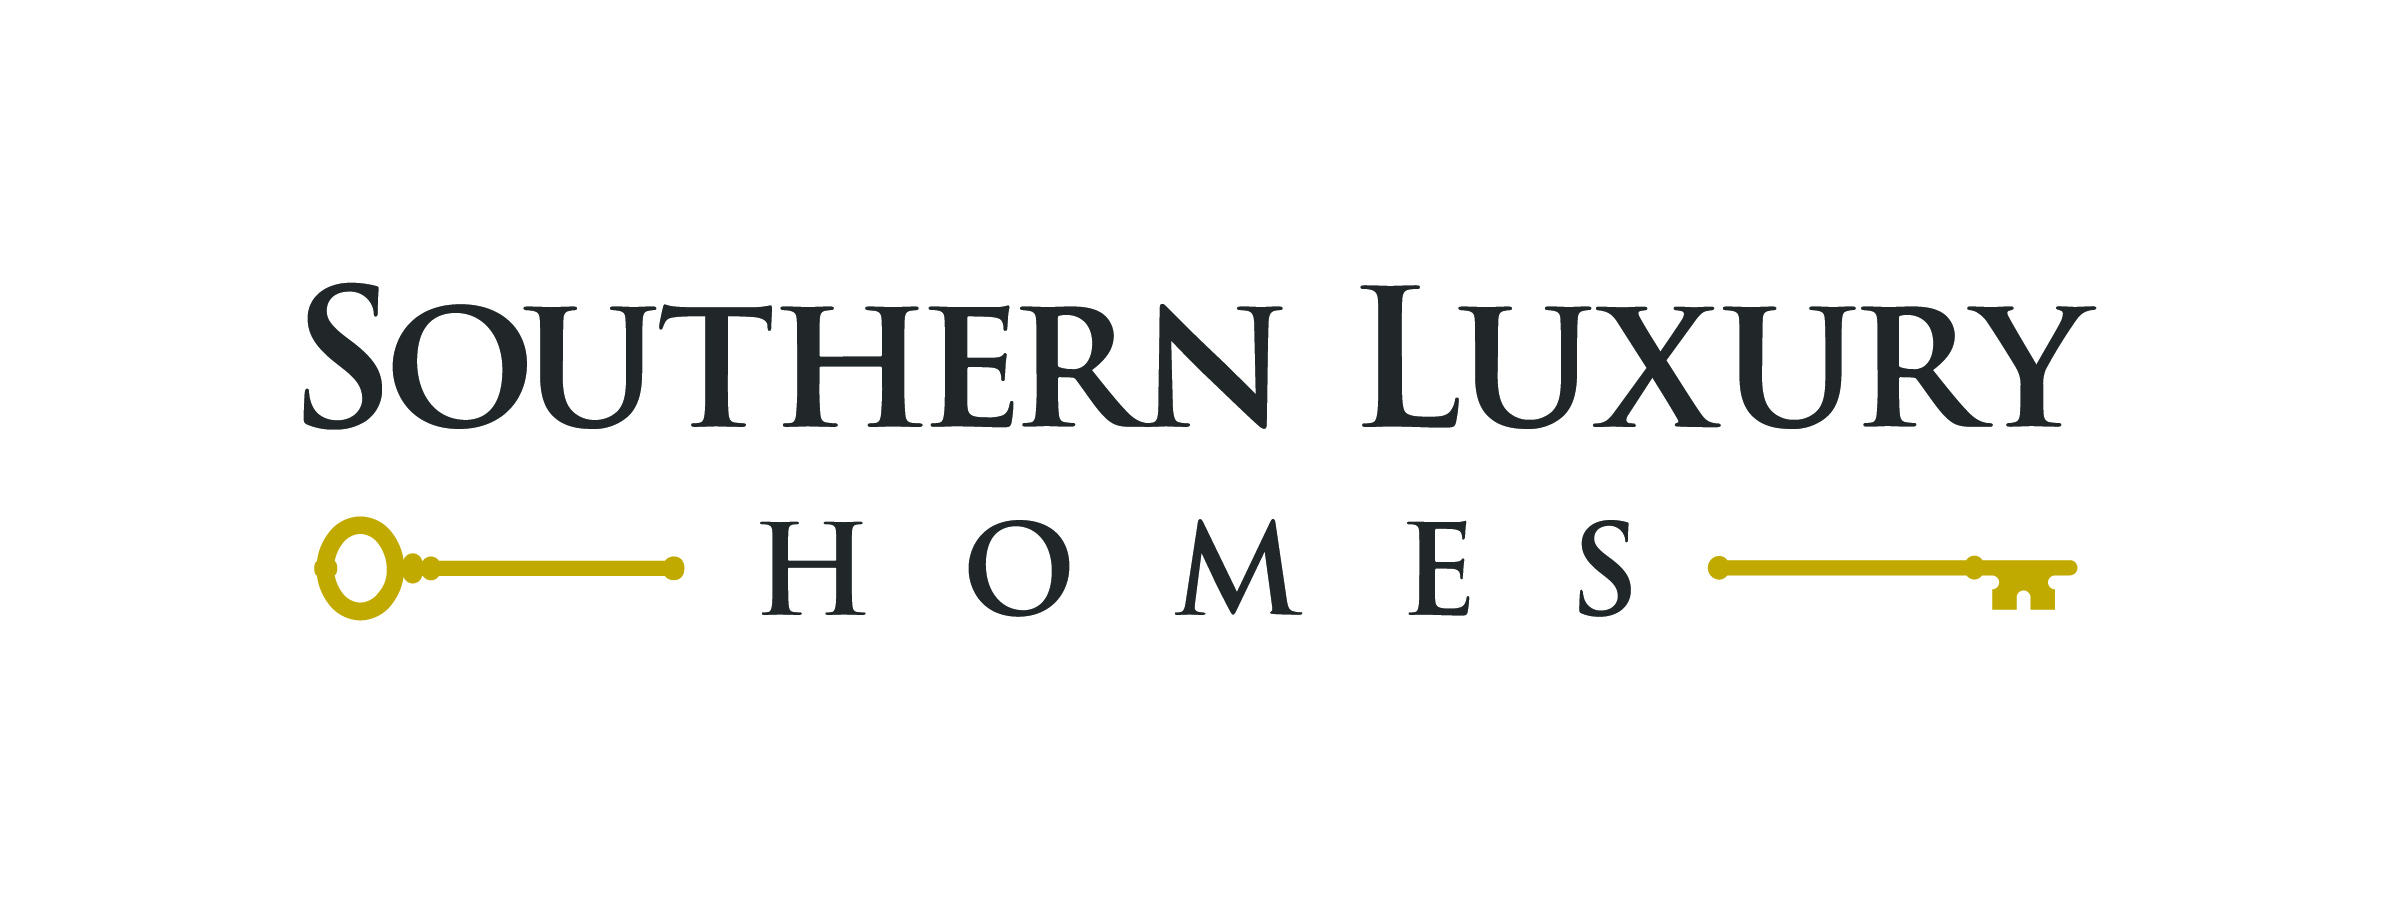 Southen Luxury Homes, Monday, April 18, 2022, Press release picture